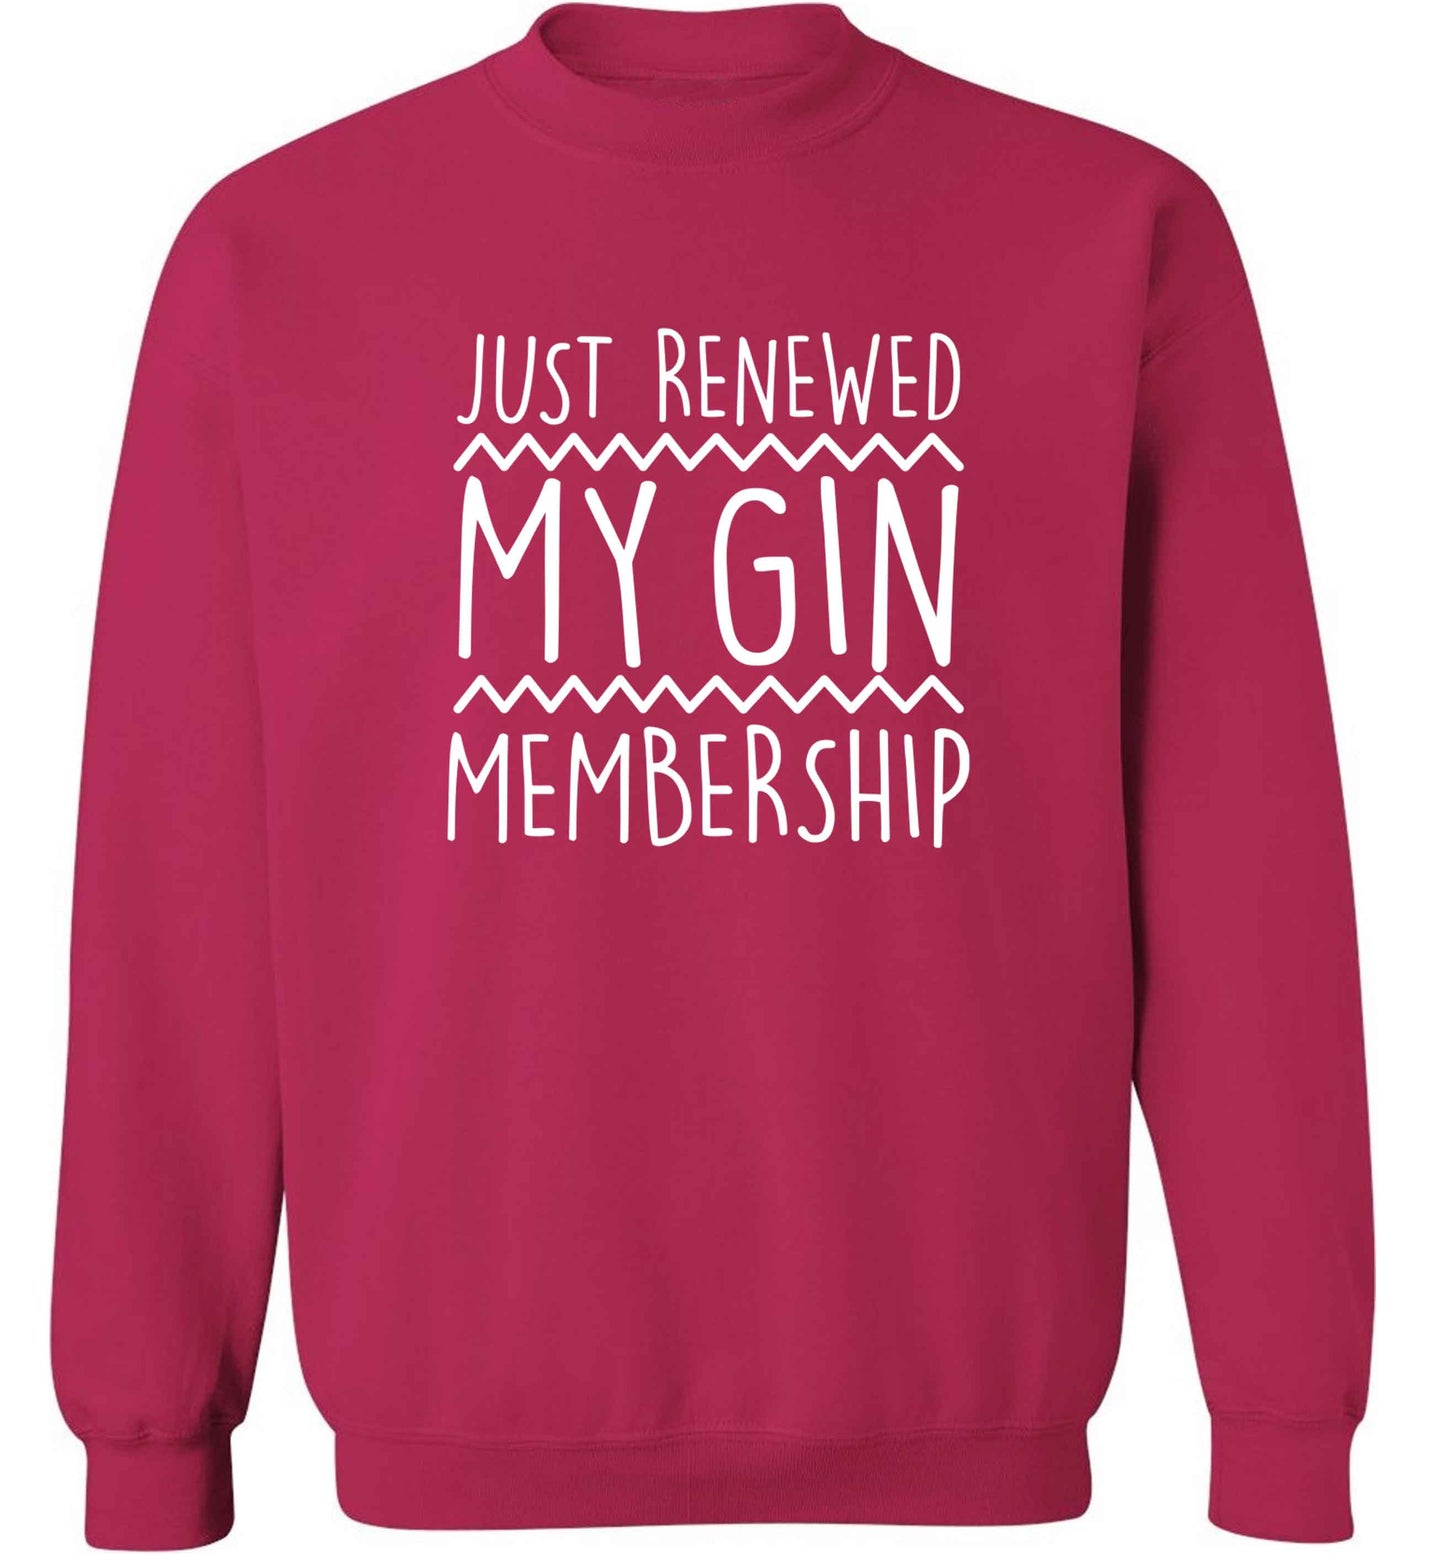 Just renewed my gin membership adult's unisex pink sweater 2XL